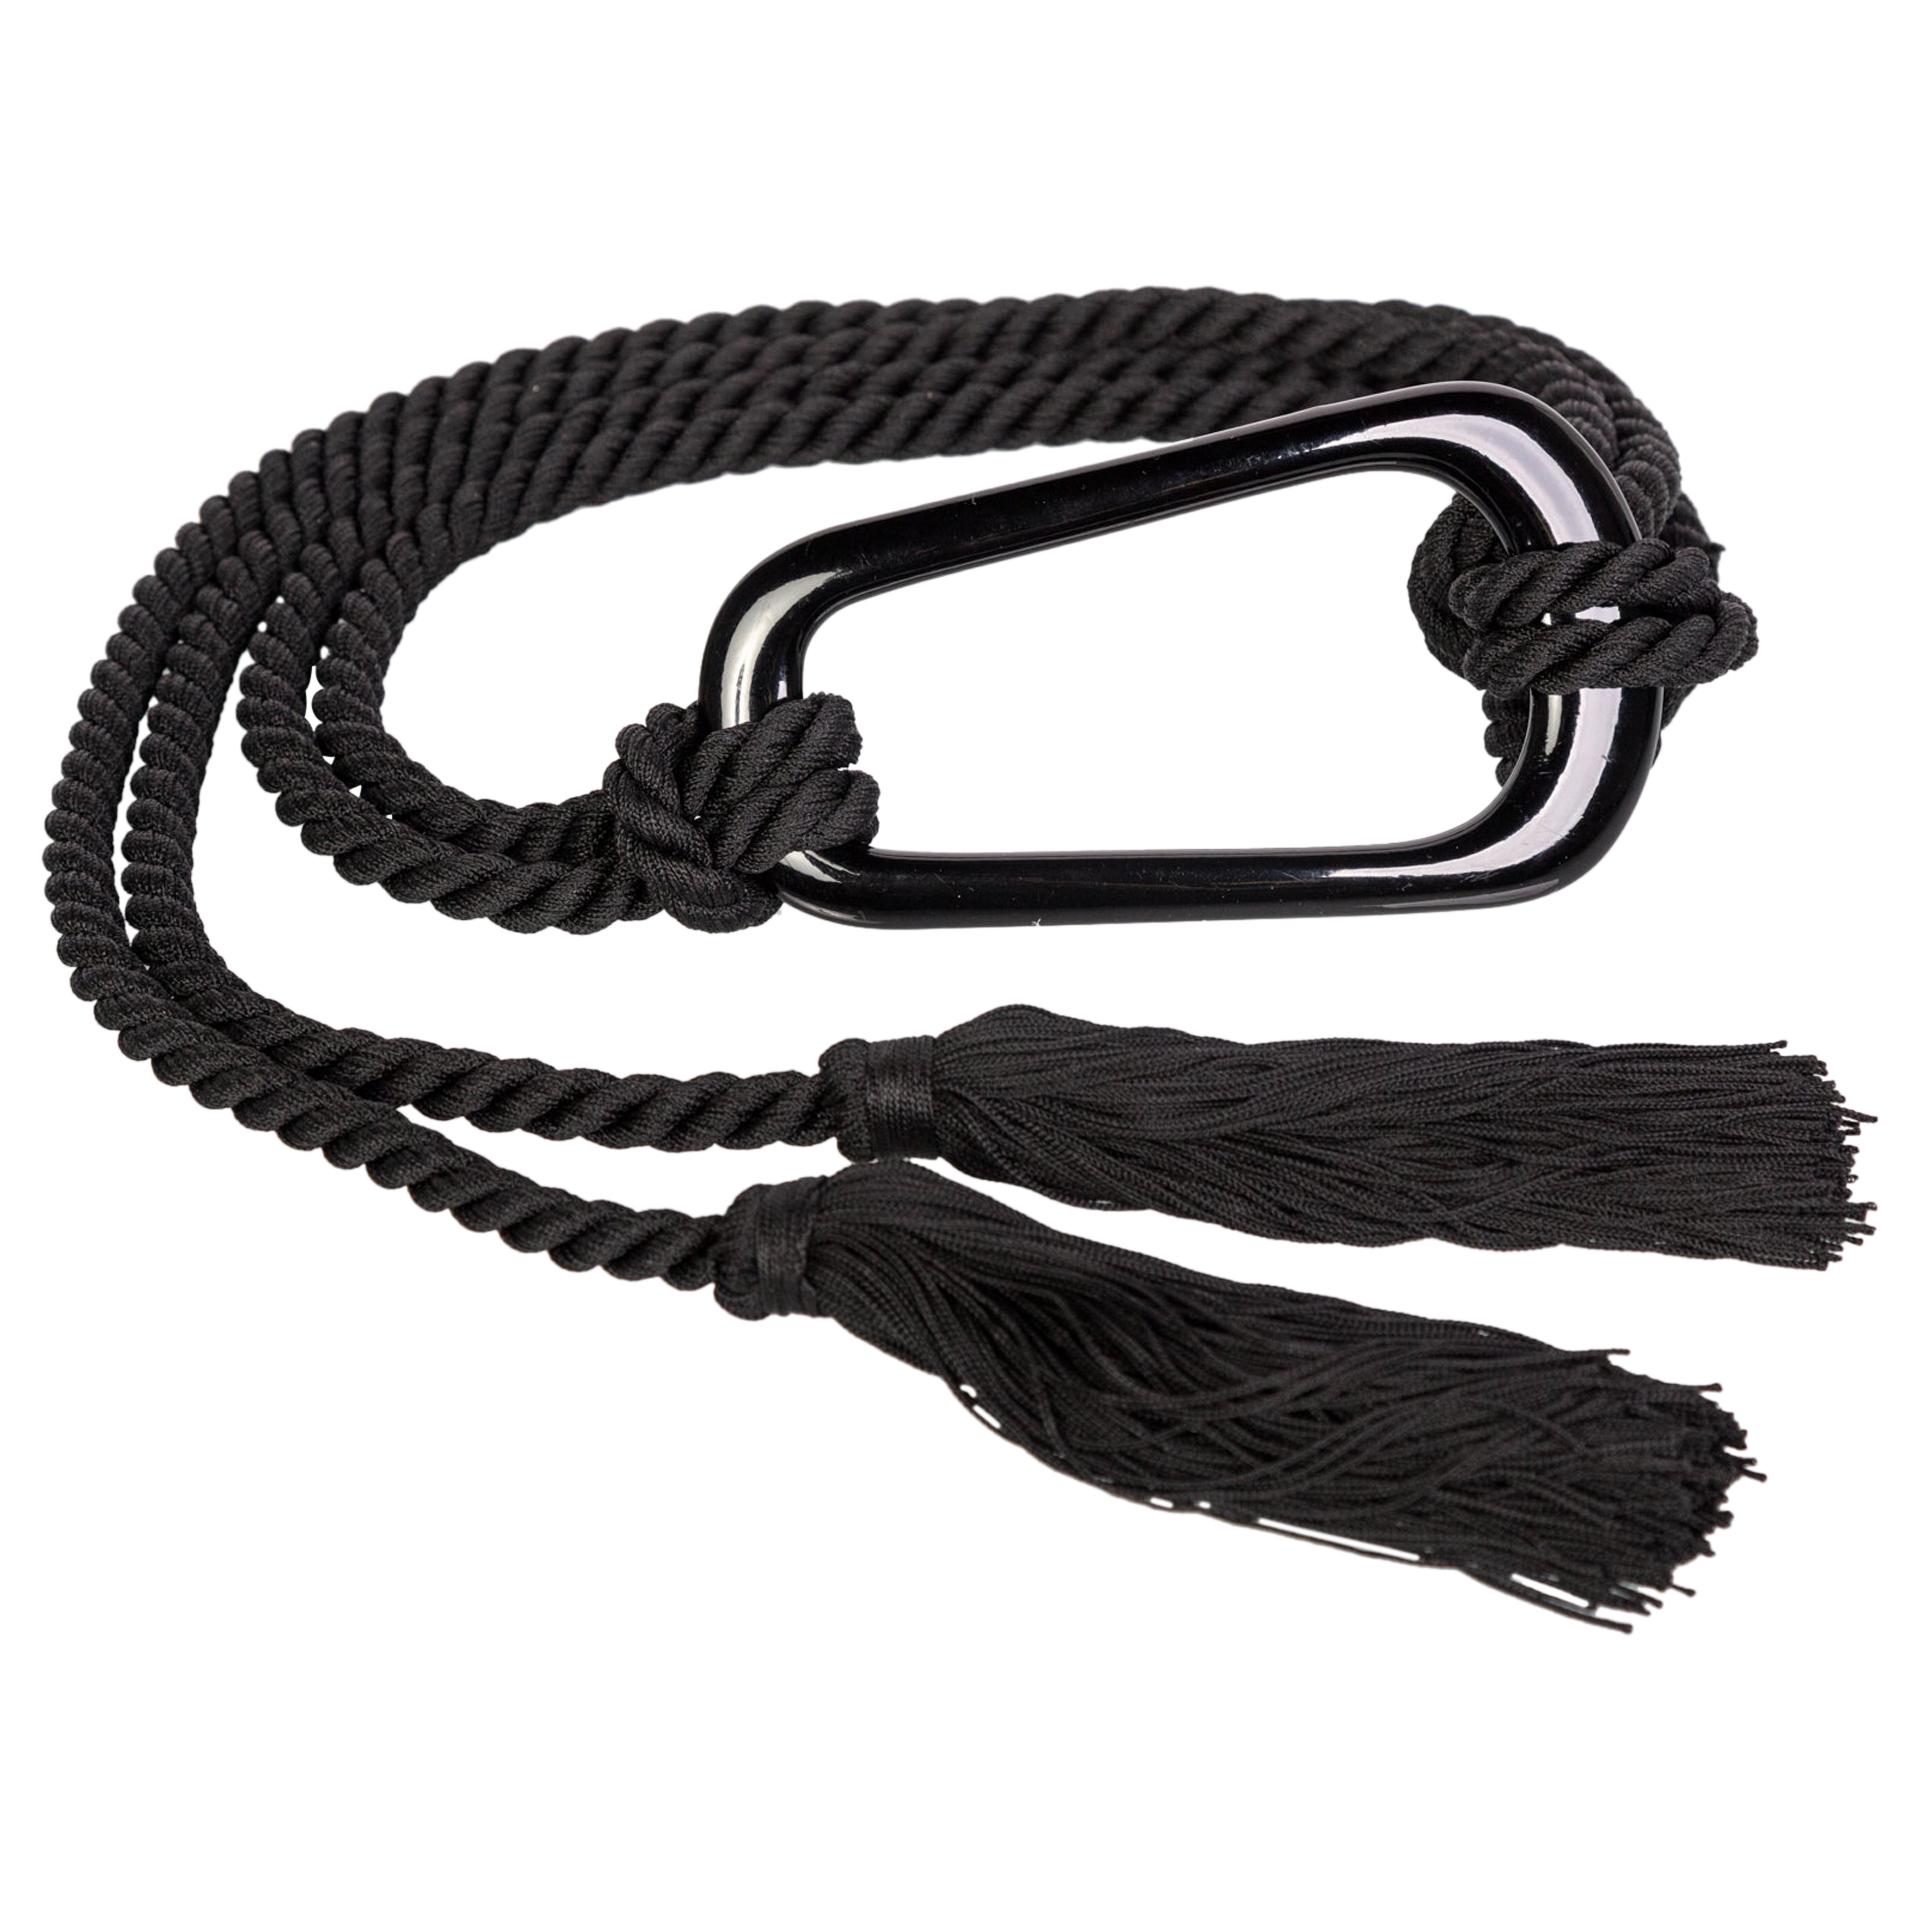 Rope Belt Black / Long / Knotted